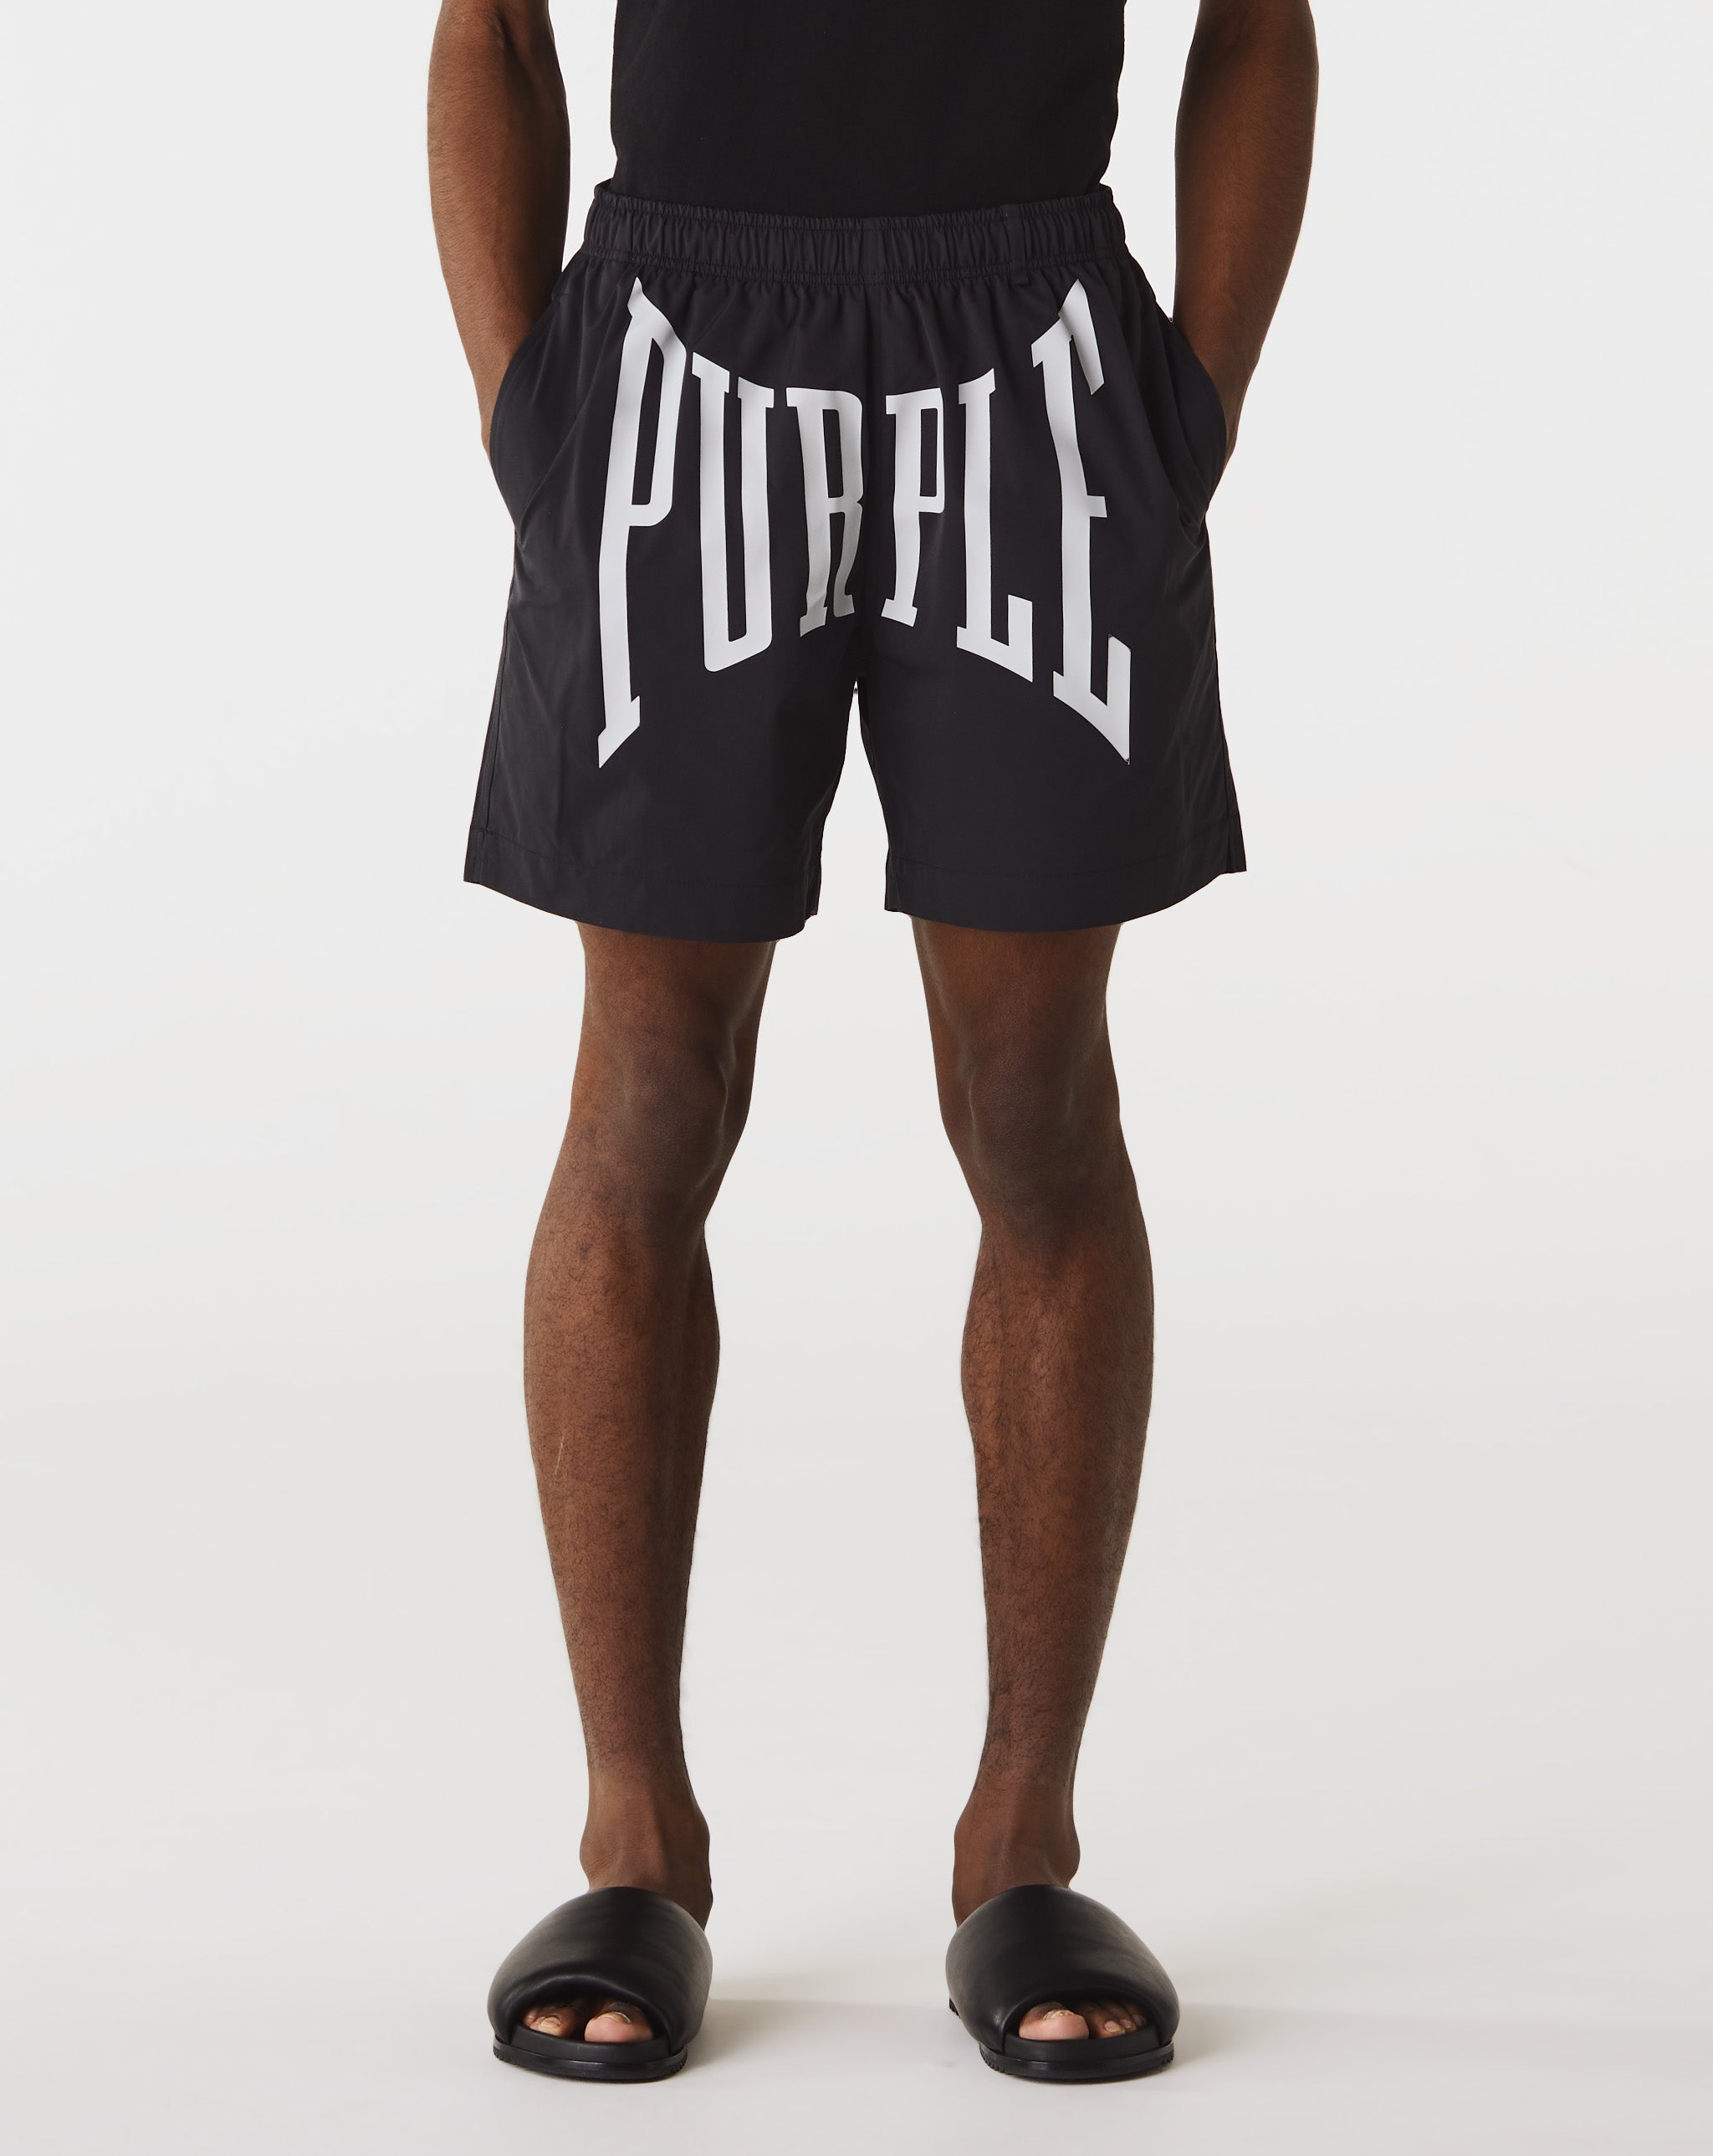 Purple Brand All Round Shorts  - XHIBITION